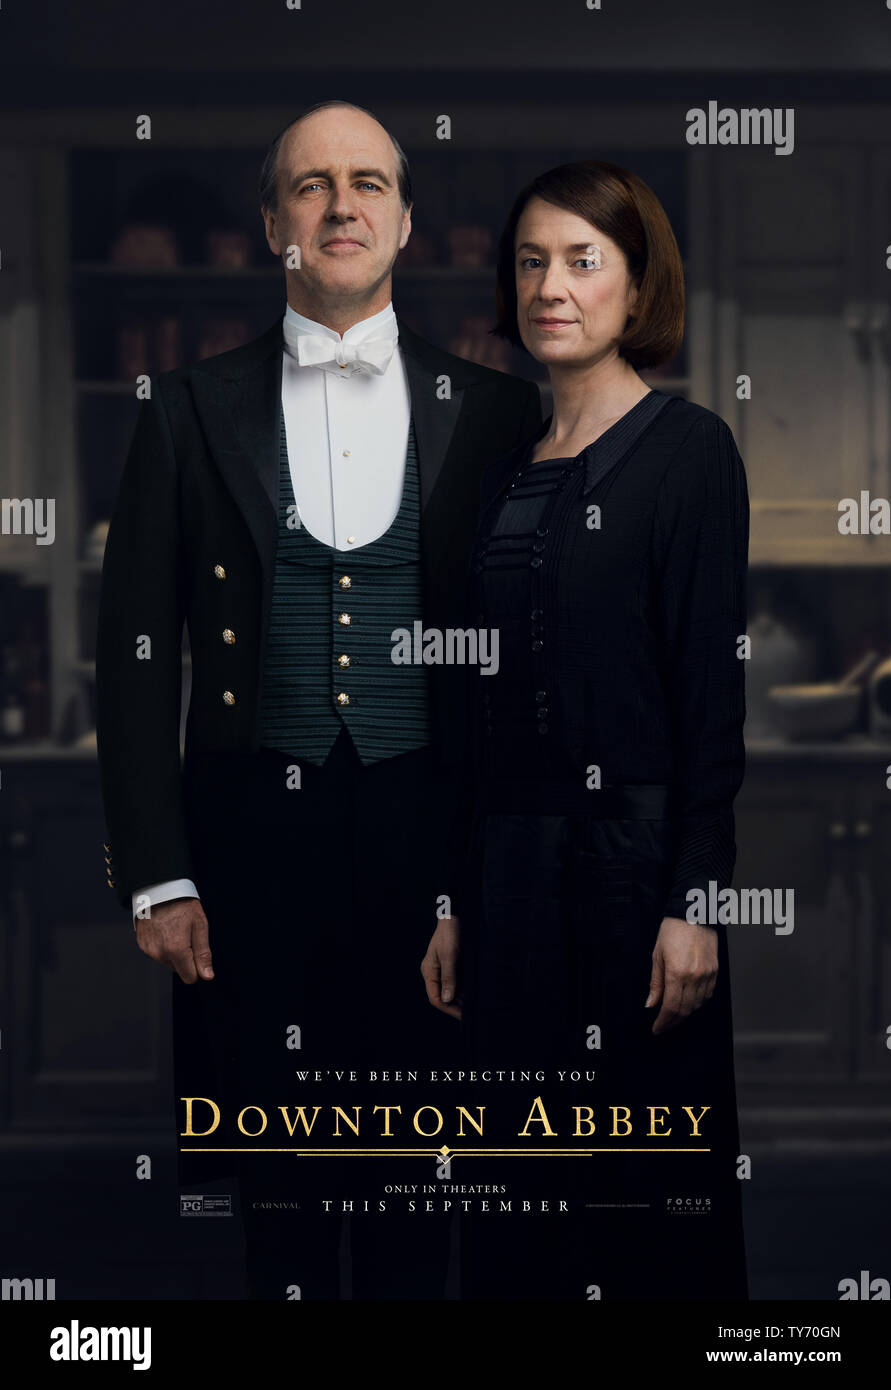 Wilton penelope dating doyle kevin ‘Downton Abbey’